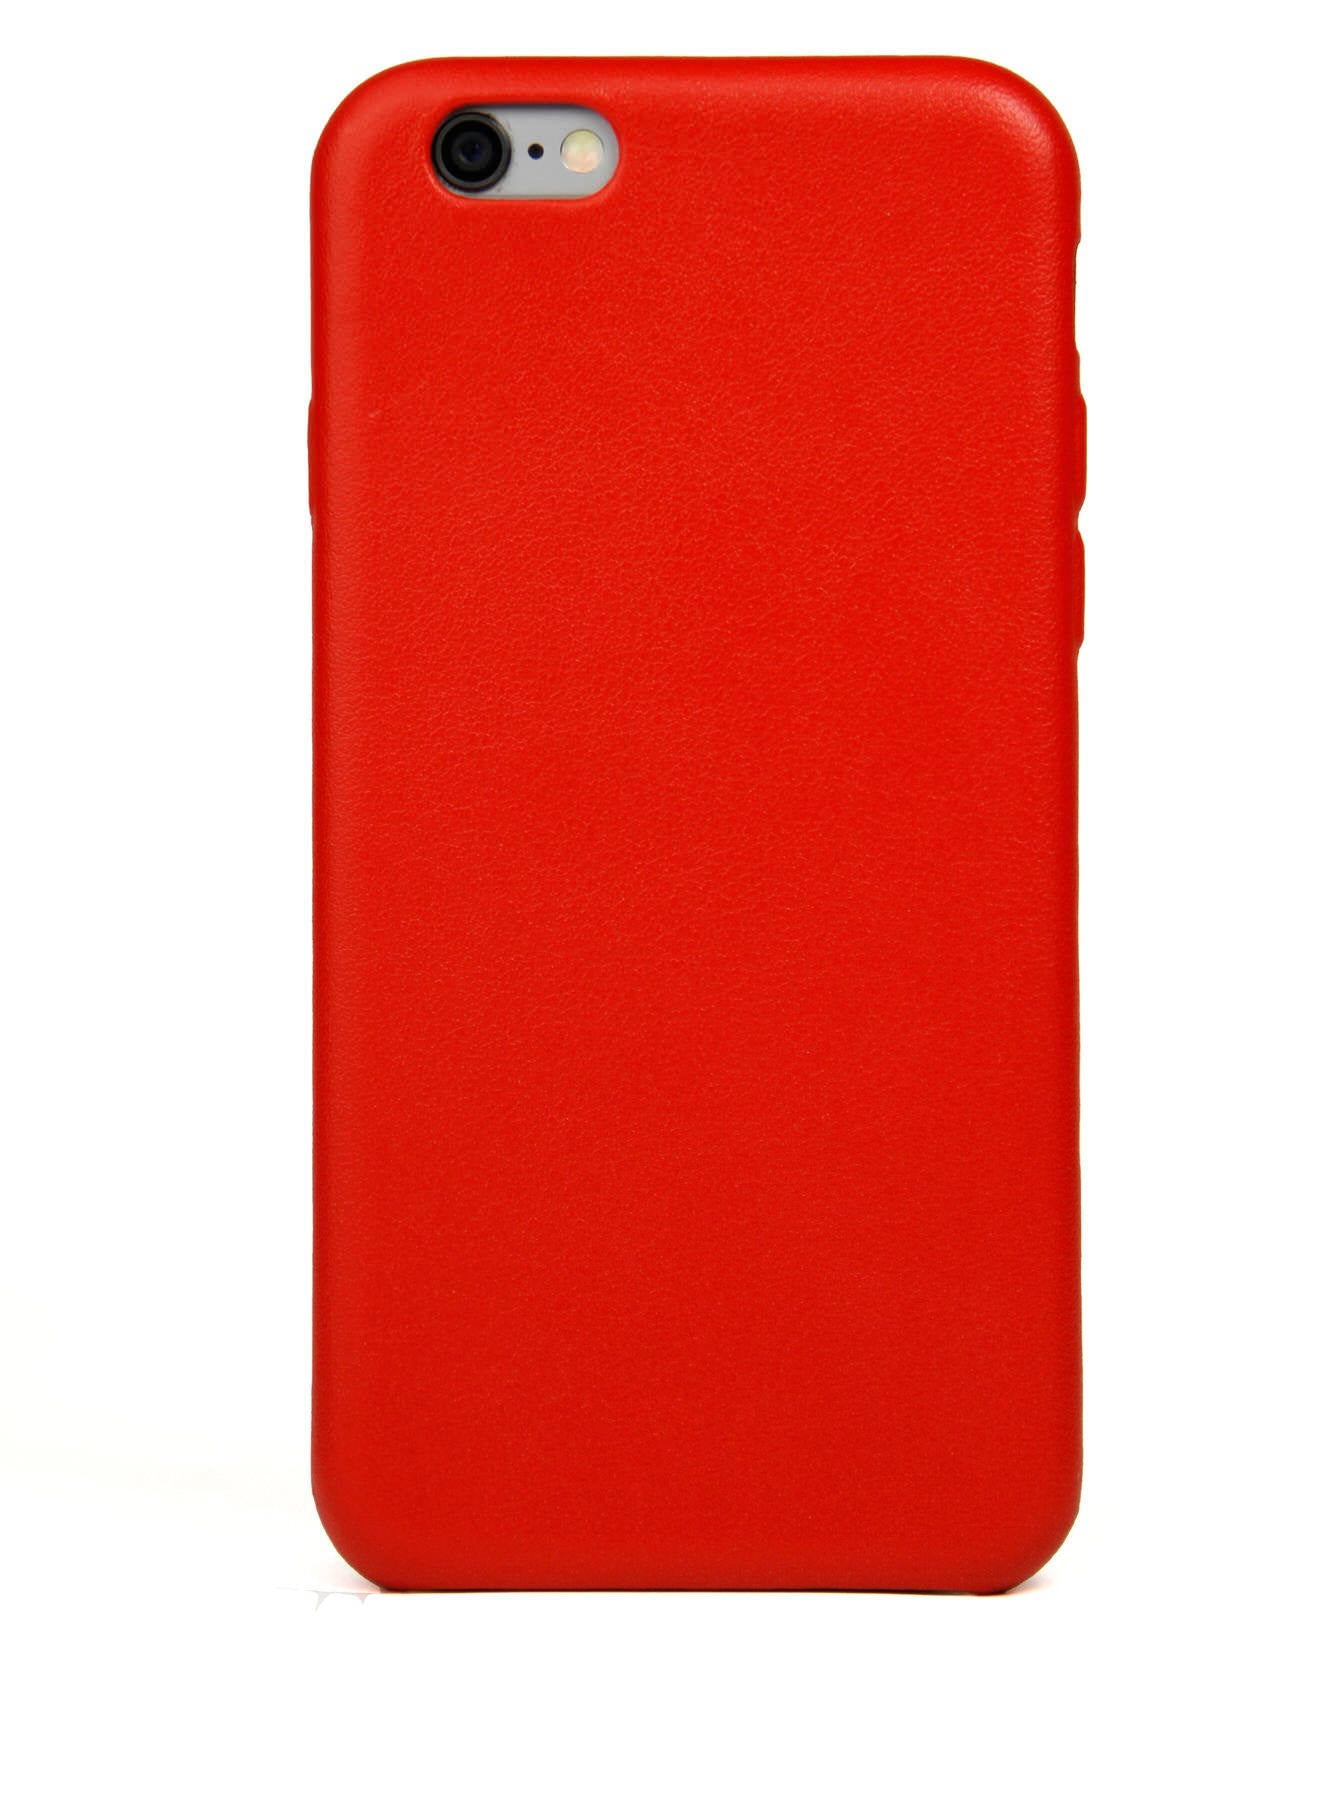 iPhone 6 Hülle, rotes Leder